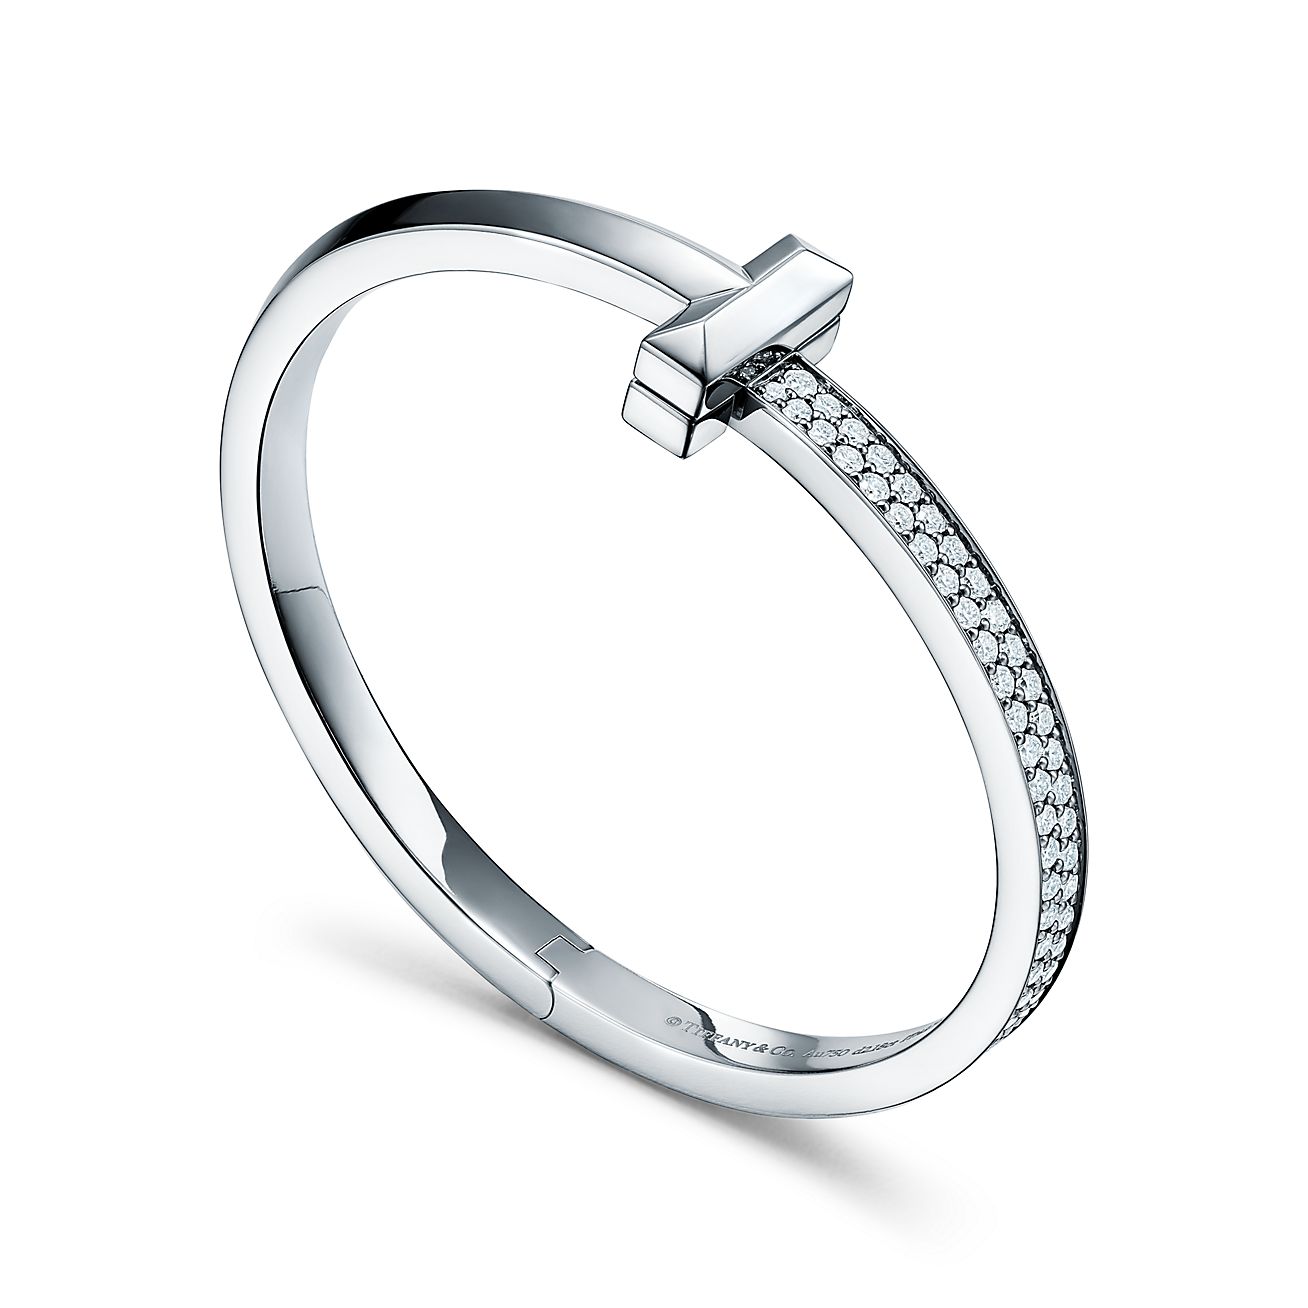 Tiffany T T1 wide diamond hinged bangle in 18k white gold, medium 